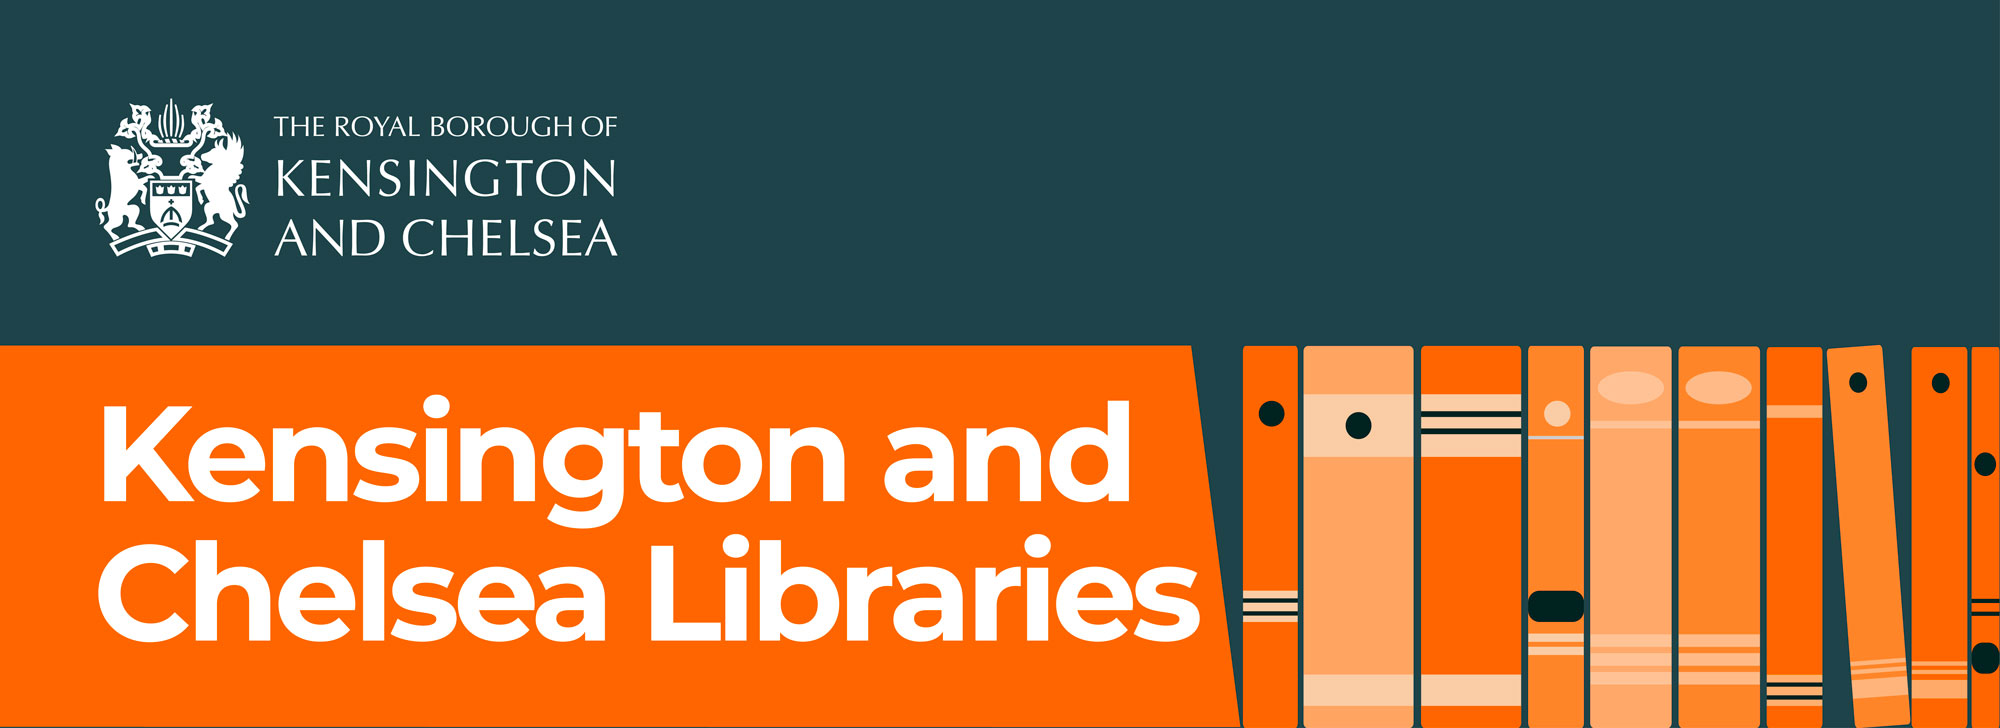 Kensington and Chelsea Libraries banner